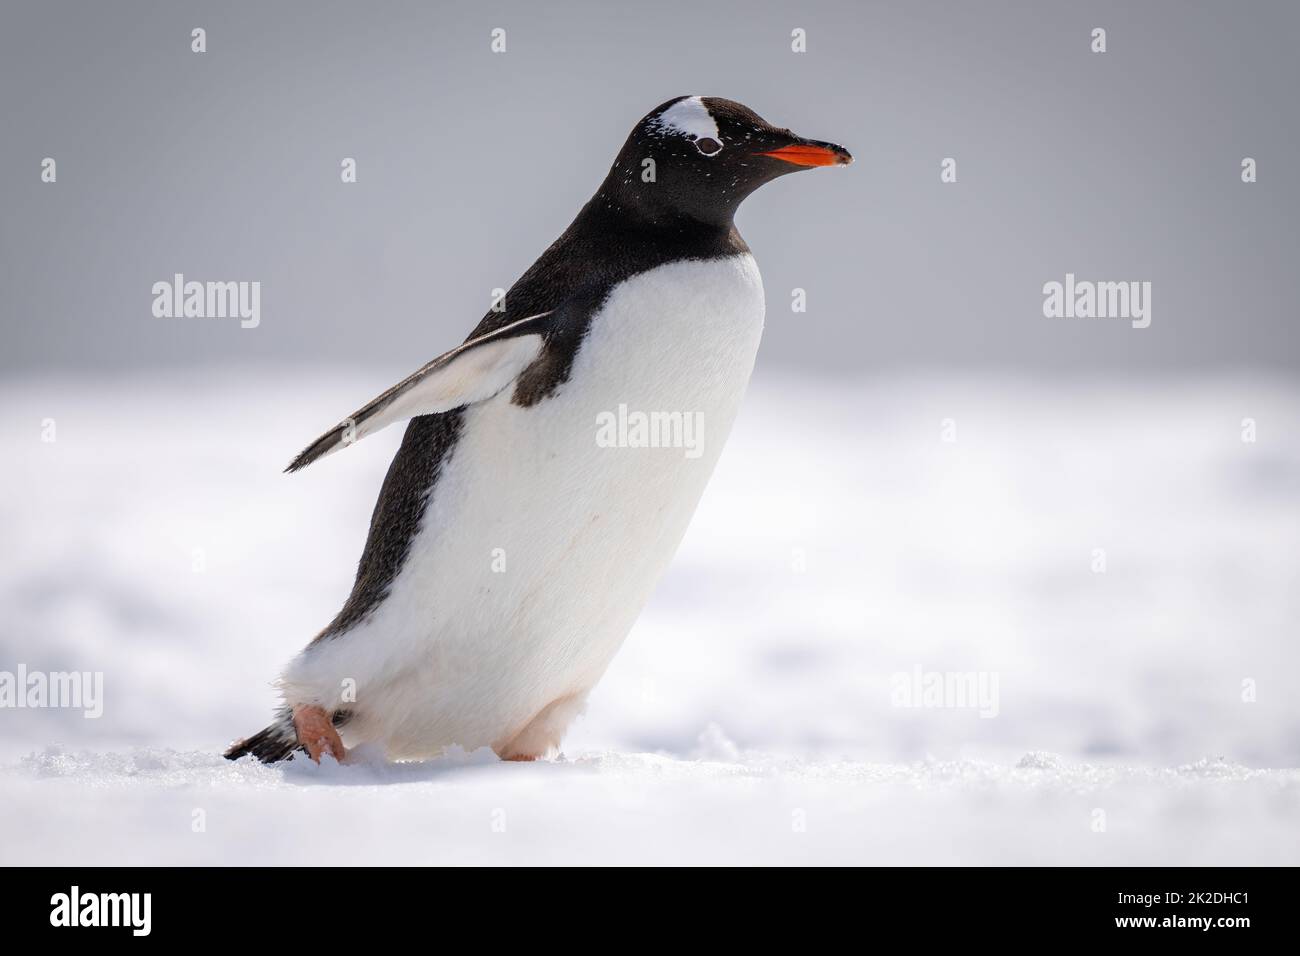 Gentoo penguin walks across snow facing right Stock Photo